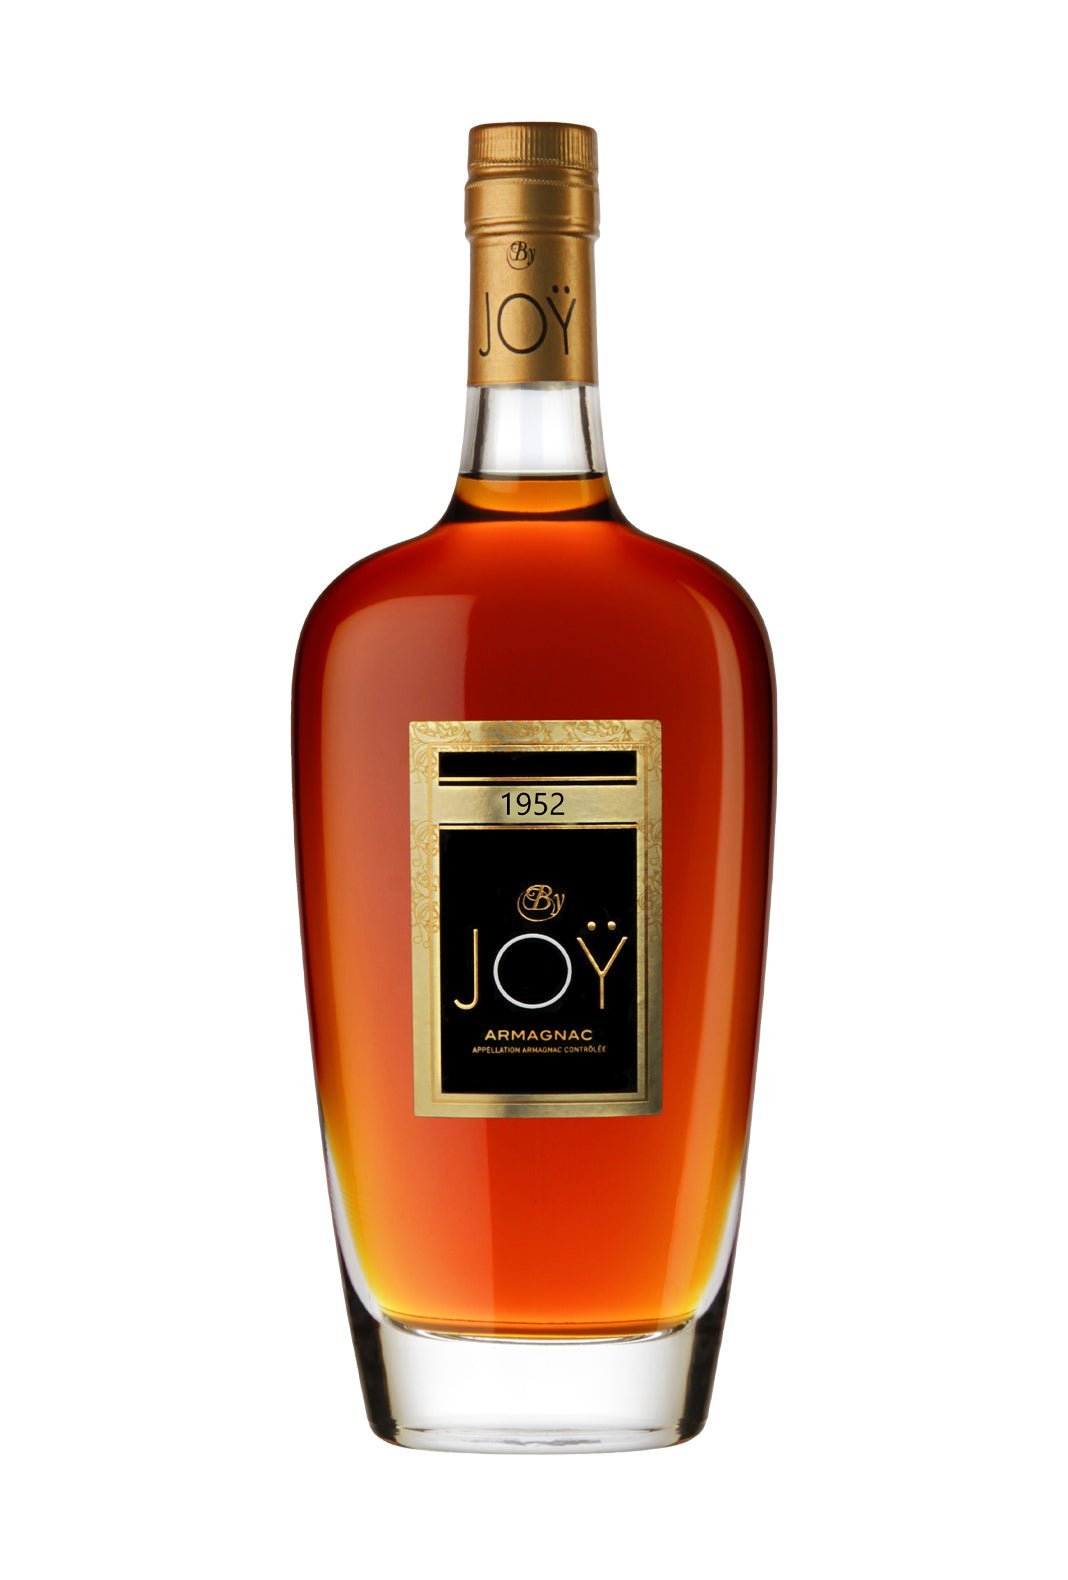 Domaine de Joy 1952 Armagnac 40.5% 700ml | Brandy | Shop online at Spirits of France